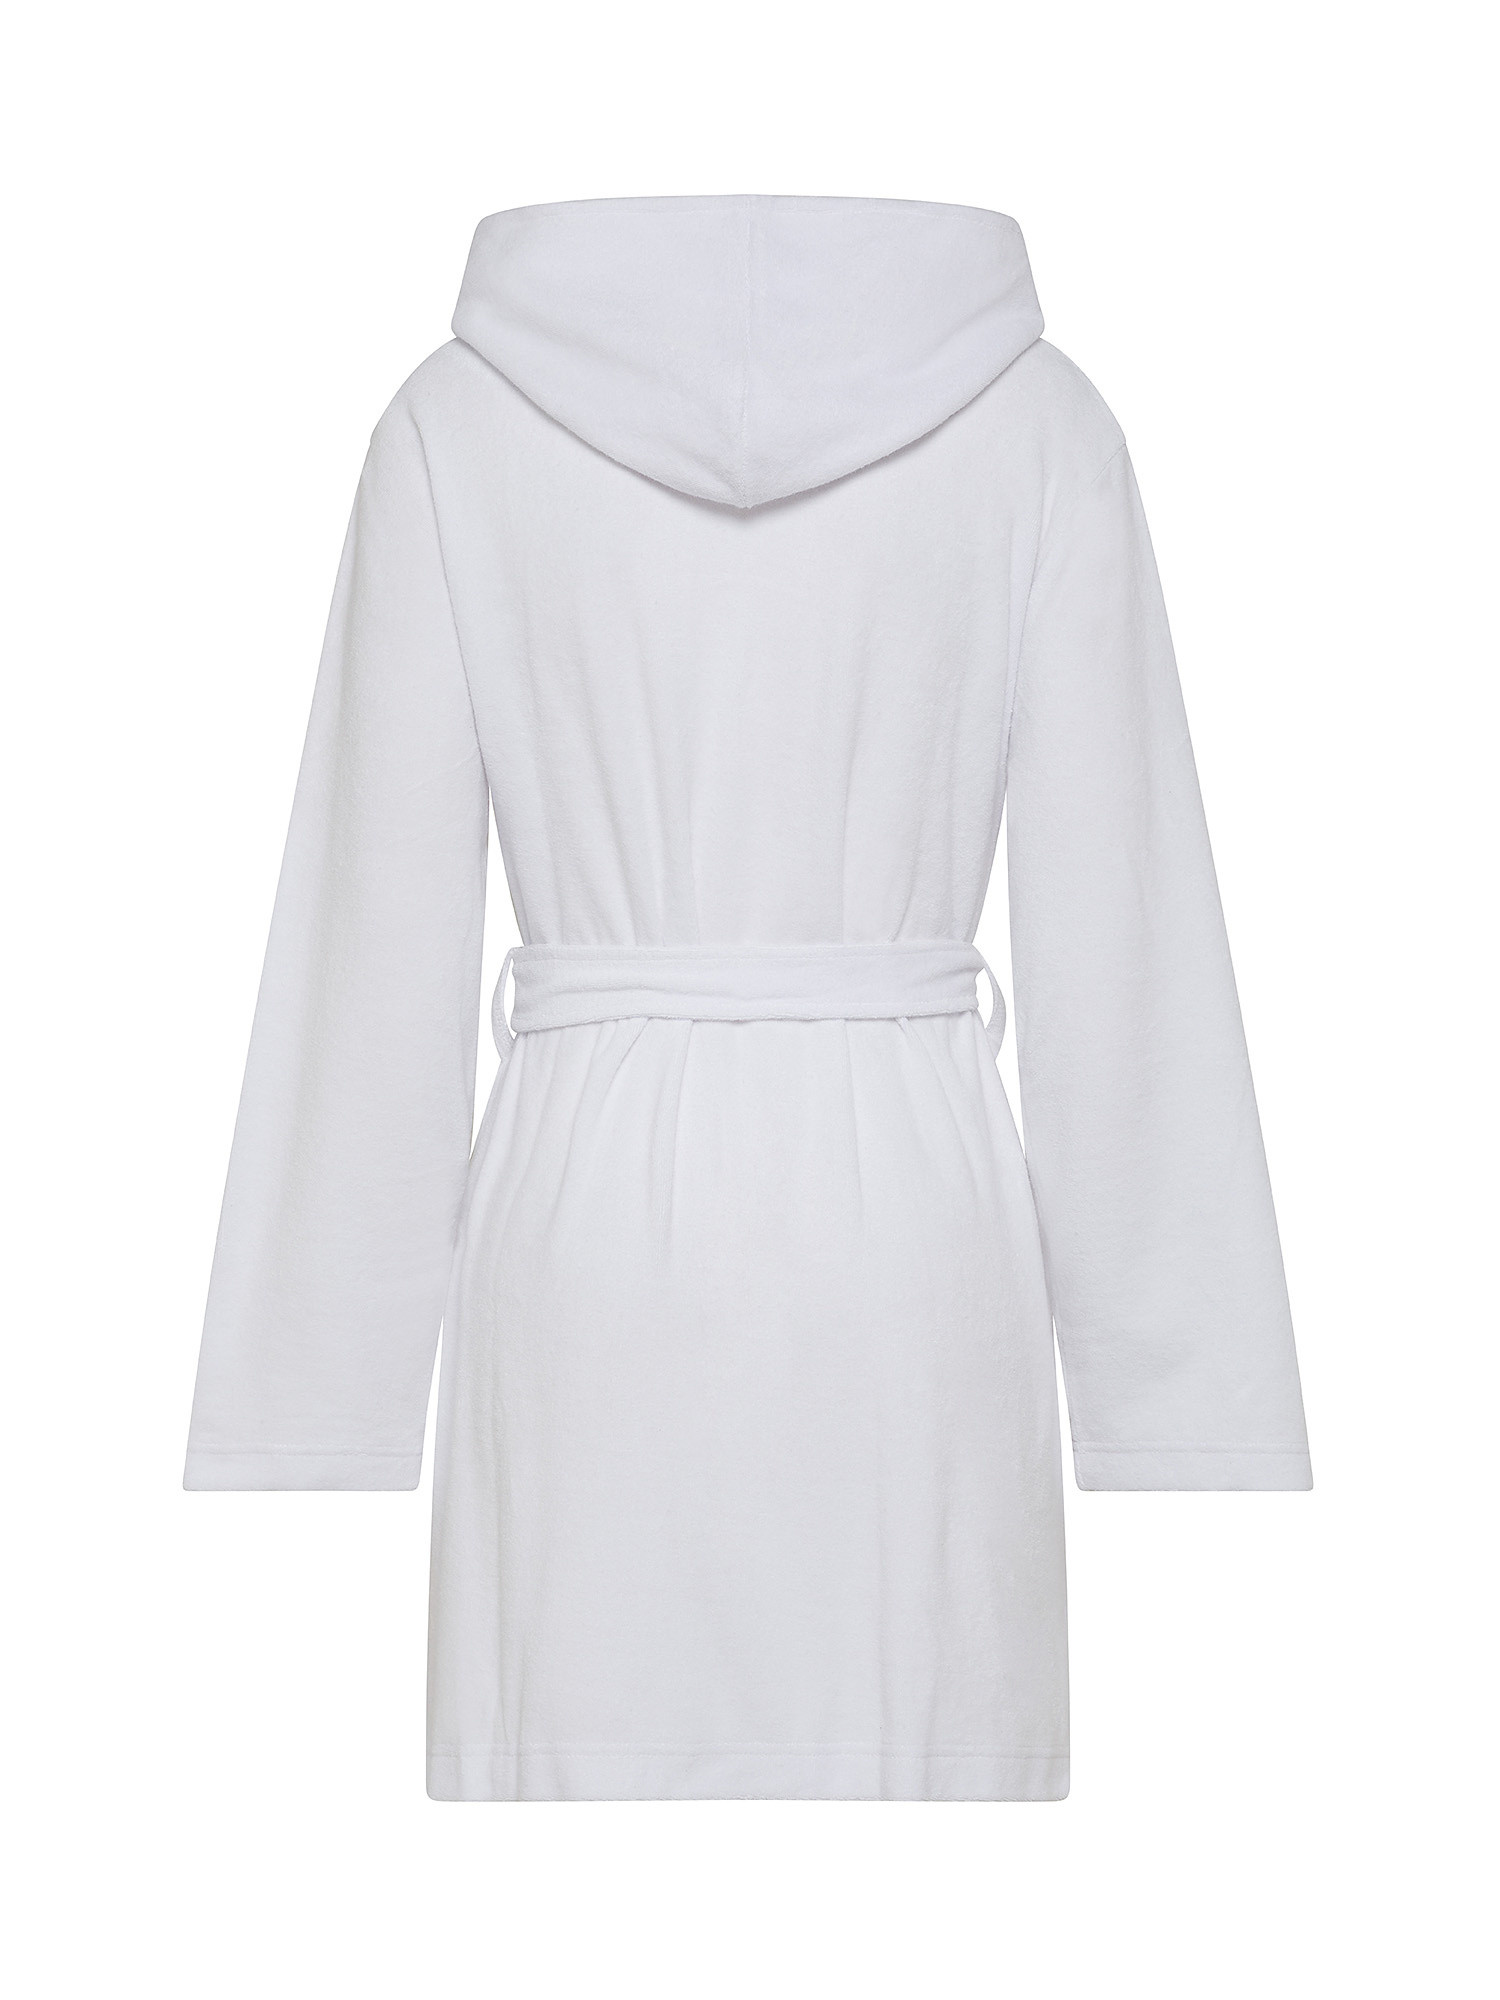 Solid color cotton blend bathrobe, White, large image number 1